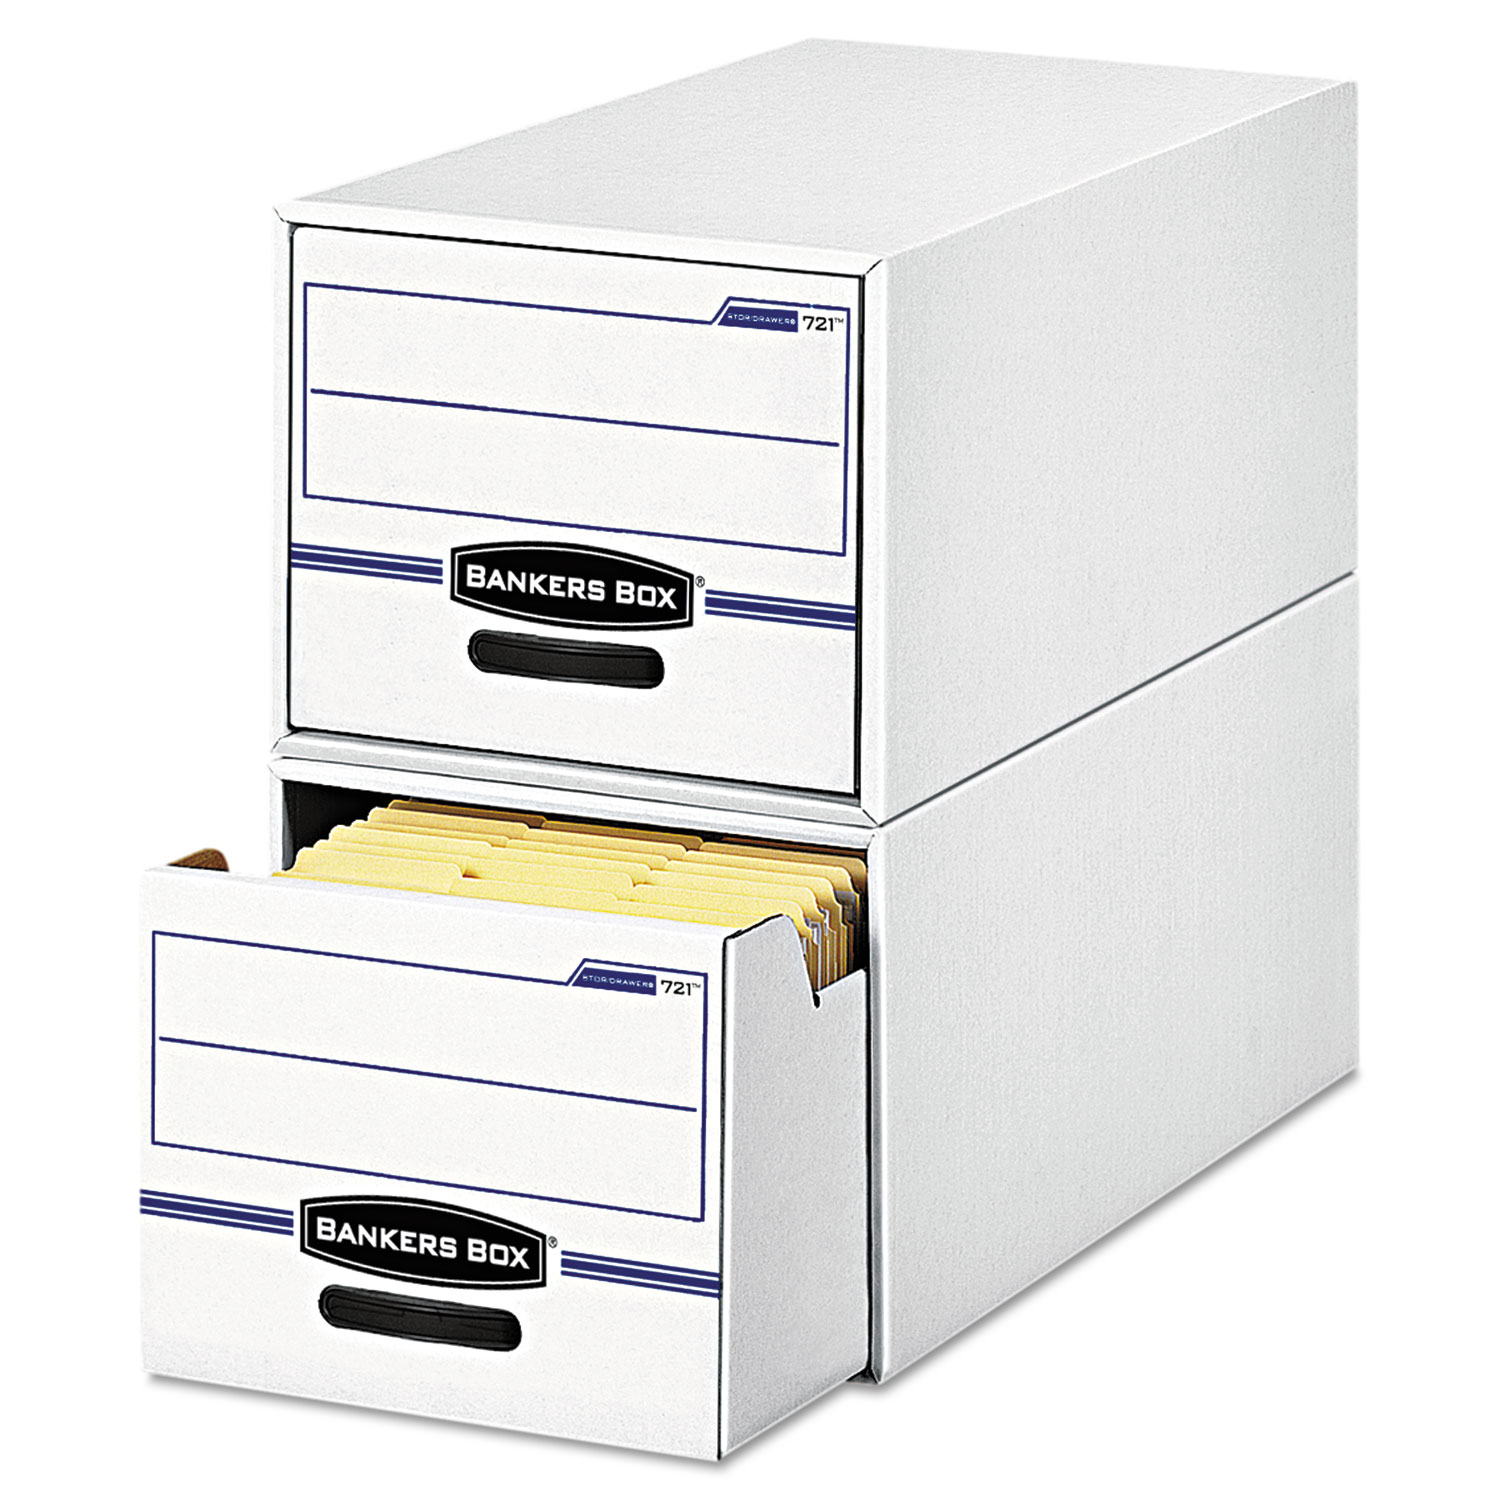  Bankers Box 00721 STOR/DRAWER Basic Space-Savings Storage Drawers, Letter Files, 14 x 25.5 x 11.5, White/Blue, 6/Carton (FEL00721) 